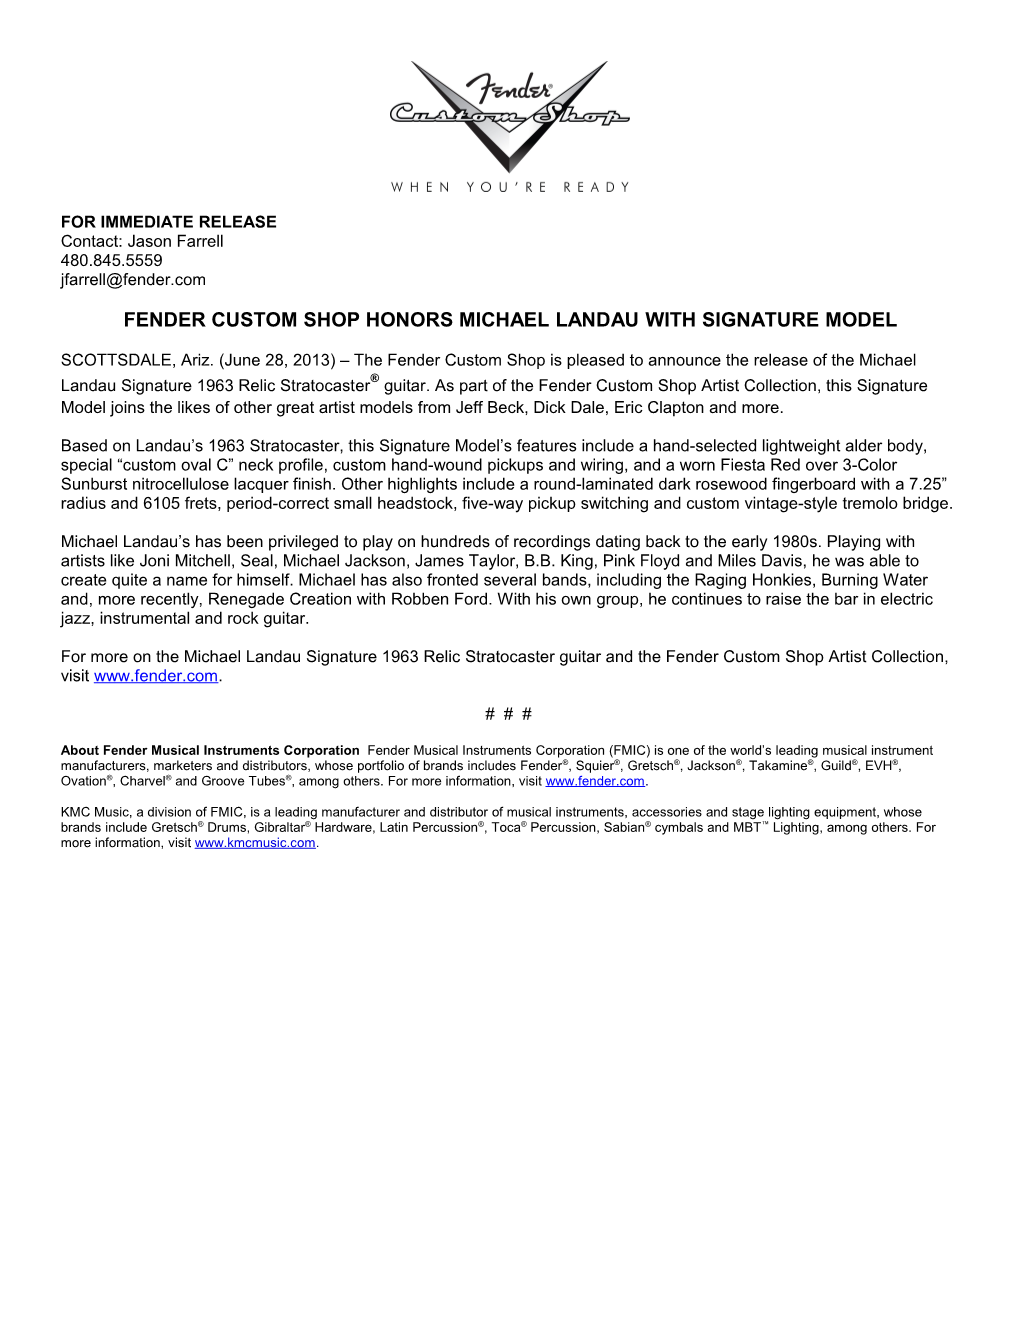 Fender Custom Shop Honors Michael Landau with Signature Model